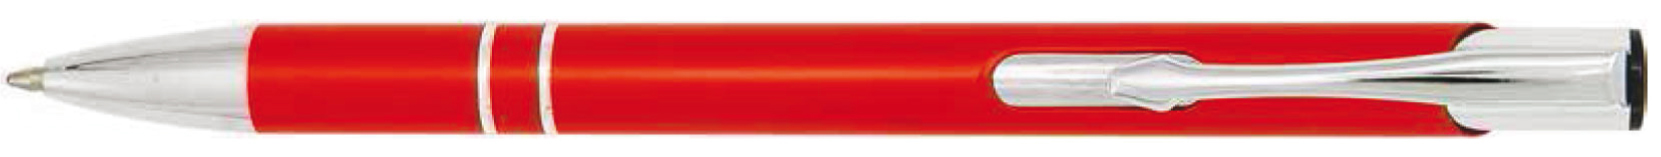 BestPen - metal promotional pen with engraving C-05